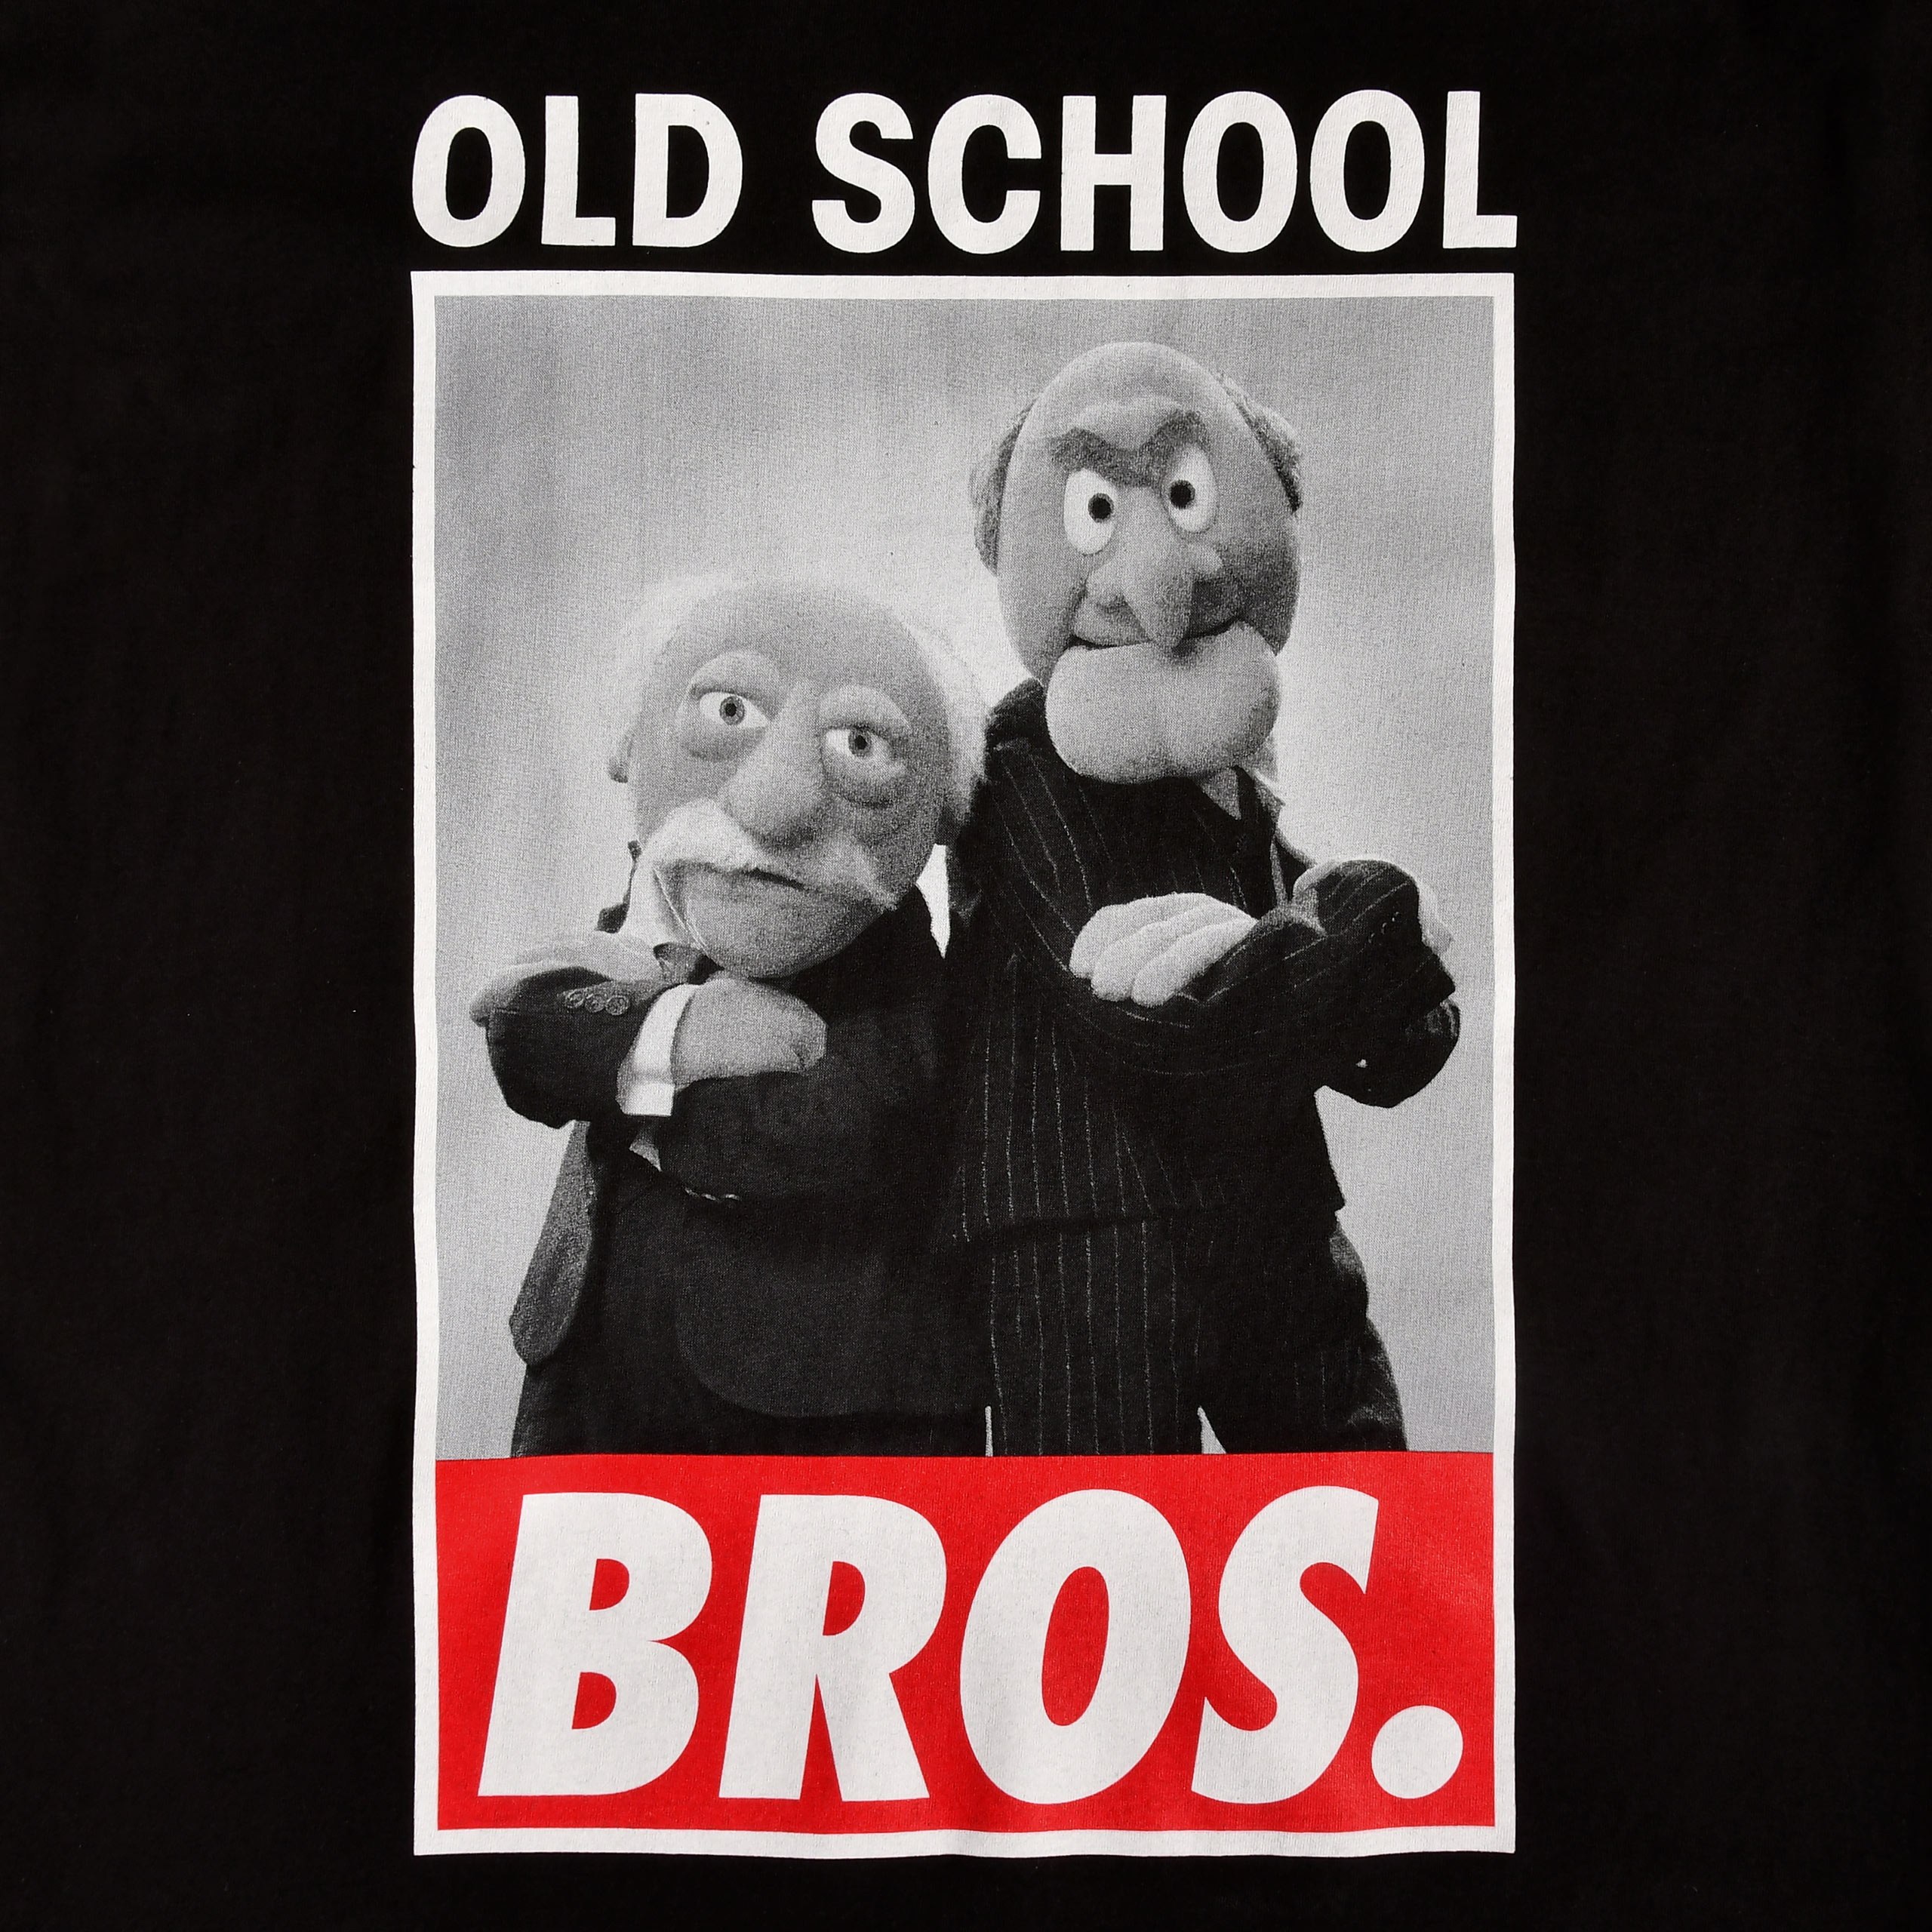 Muppets - Old School Bros. T-Shirt noir